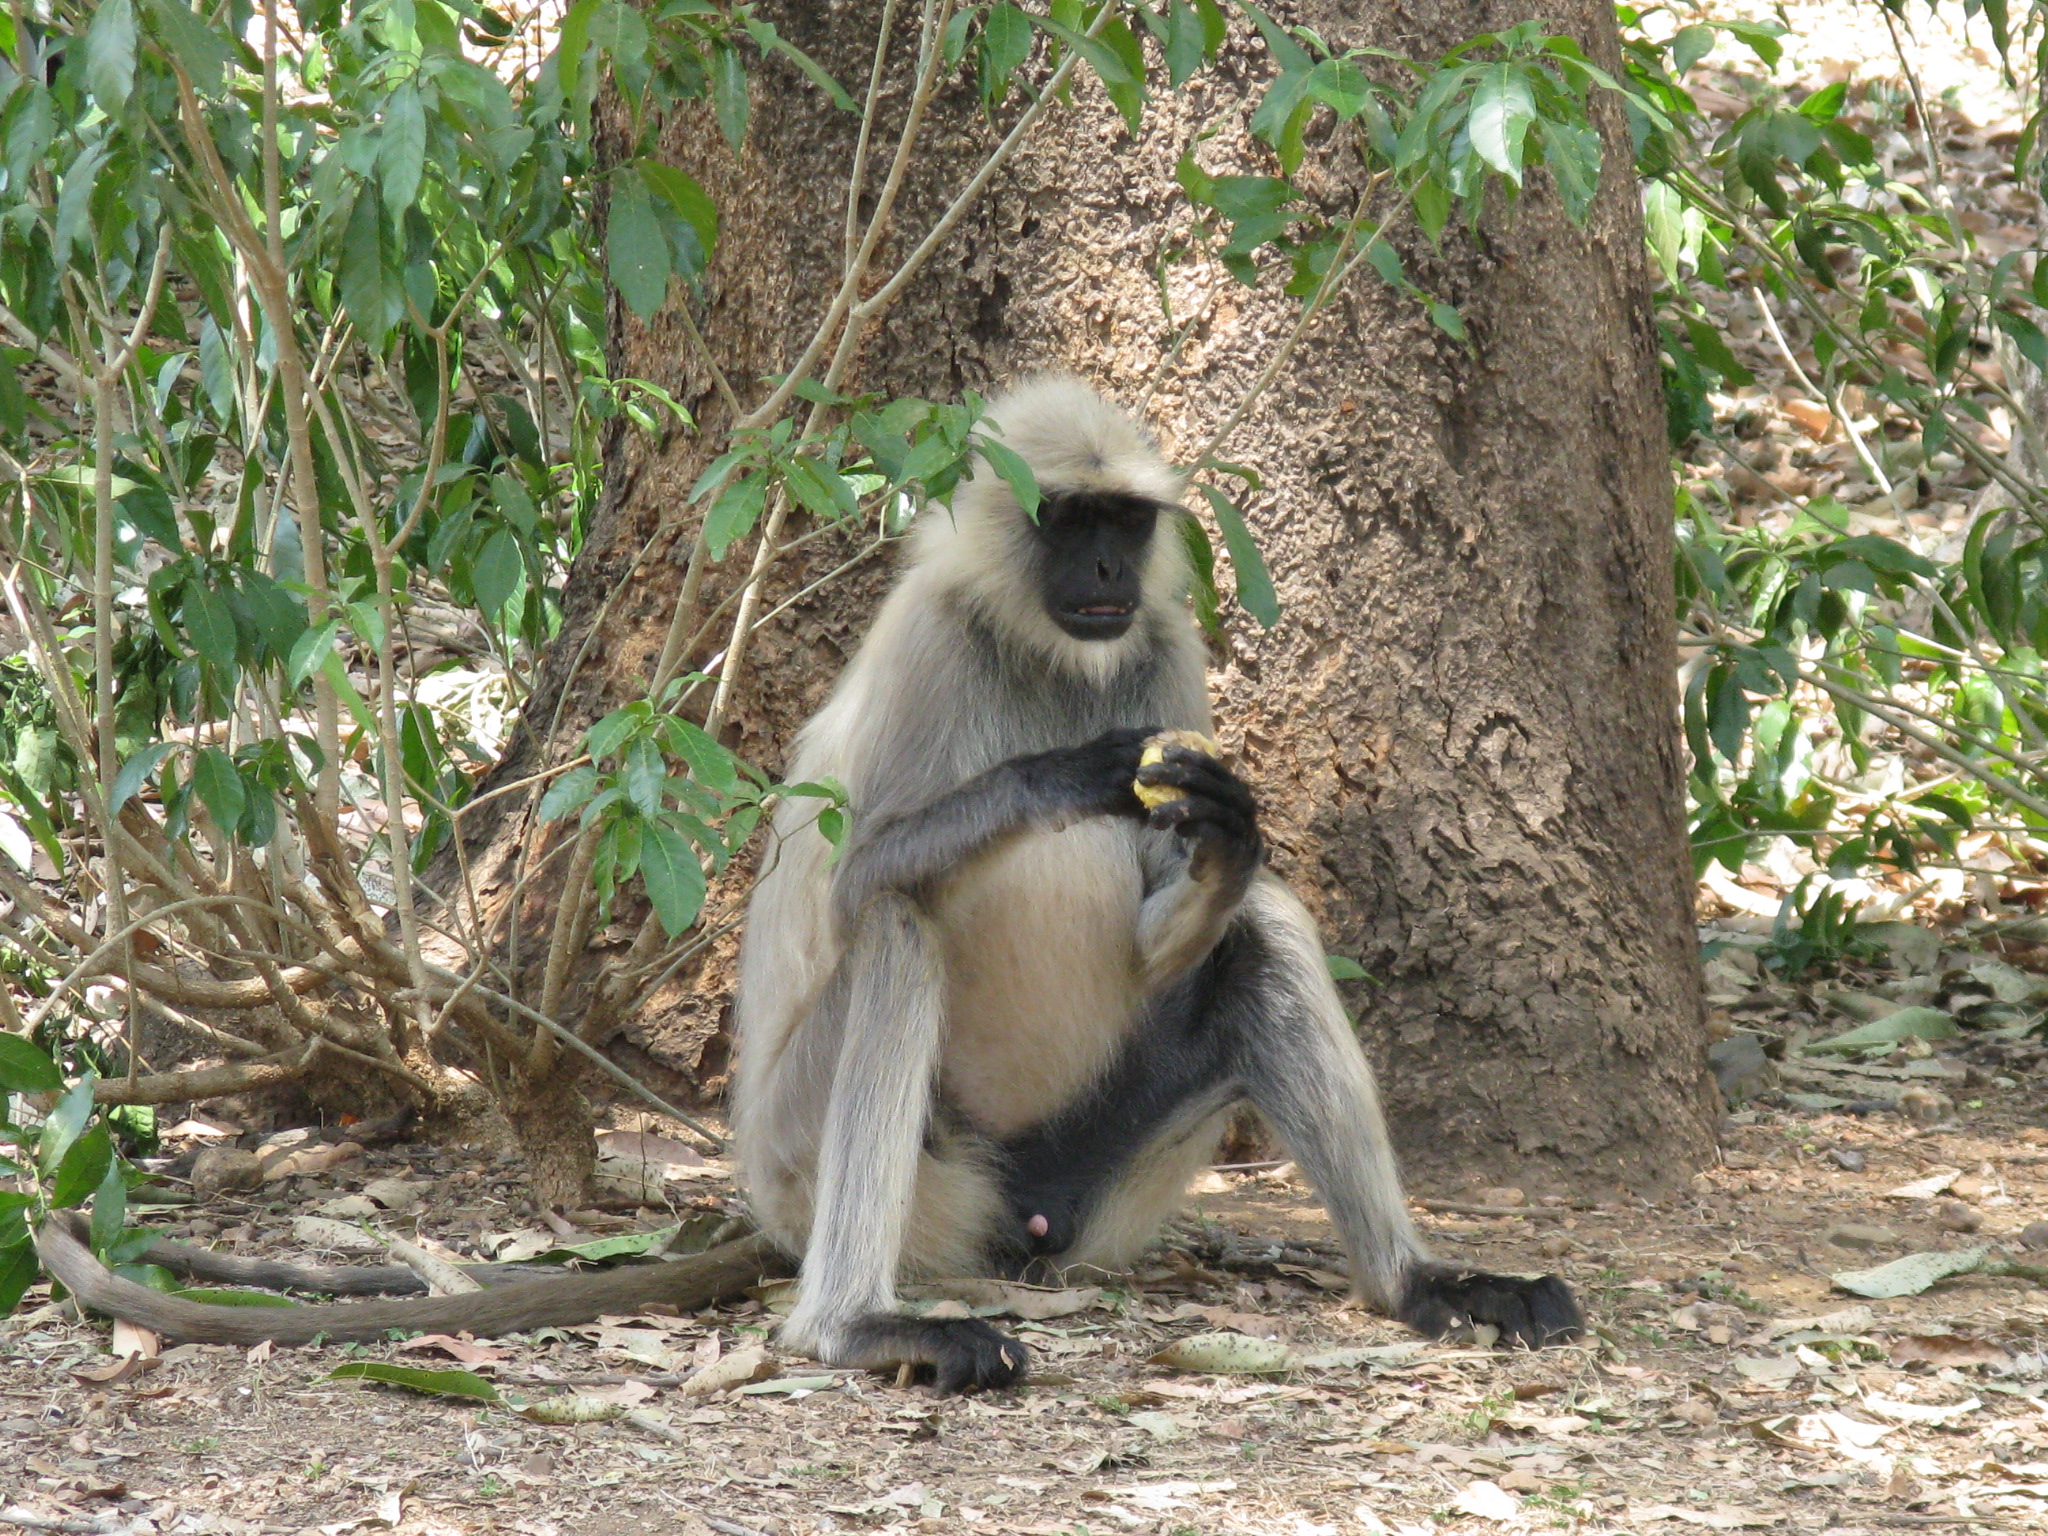 File:A curious monkey.jpg - Wikimedia Commons